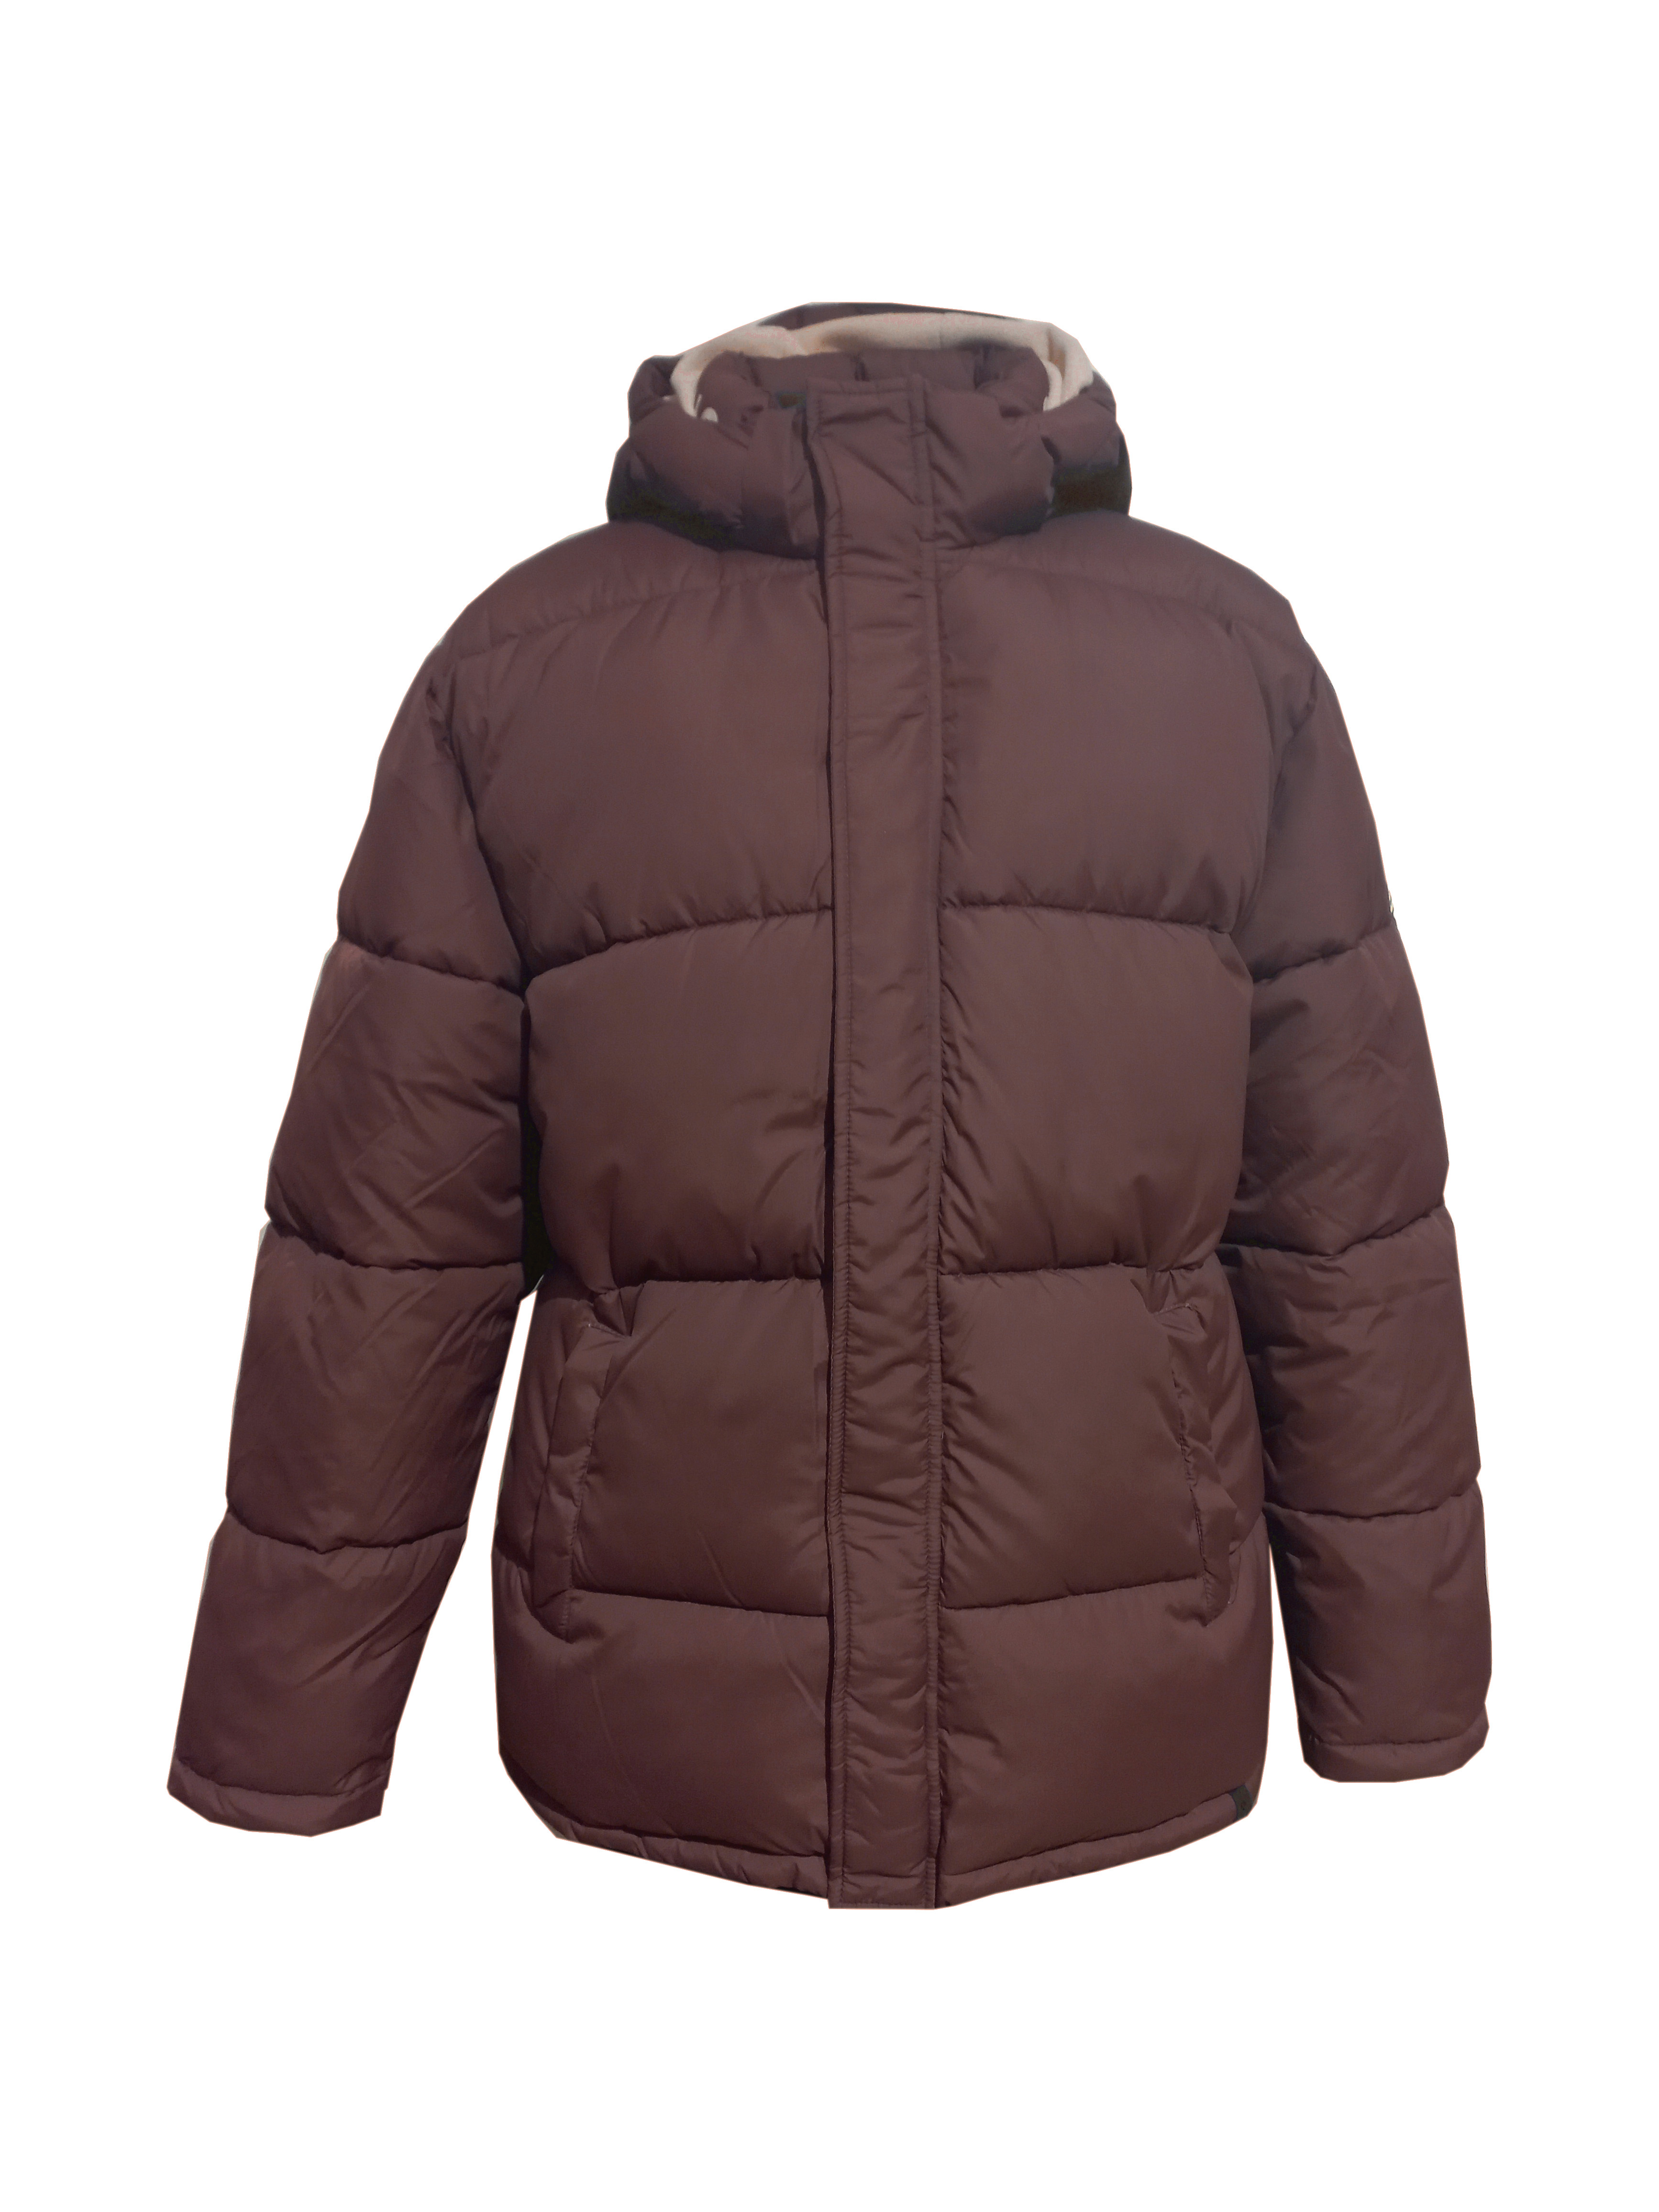 Зимняя куртка мужская Colours&Sons 9222/650/250 коричневая 54 RU